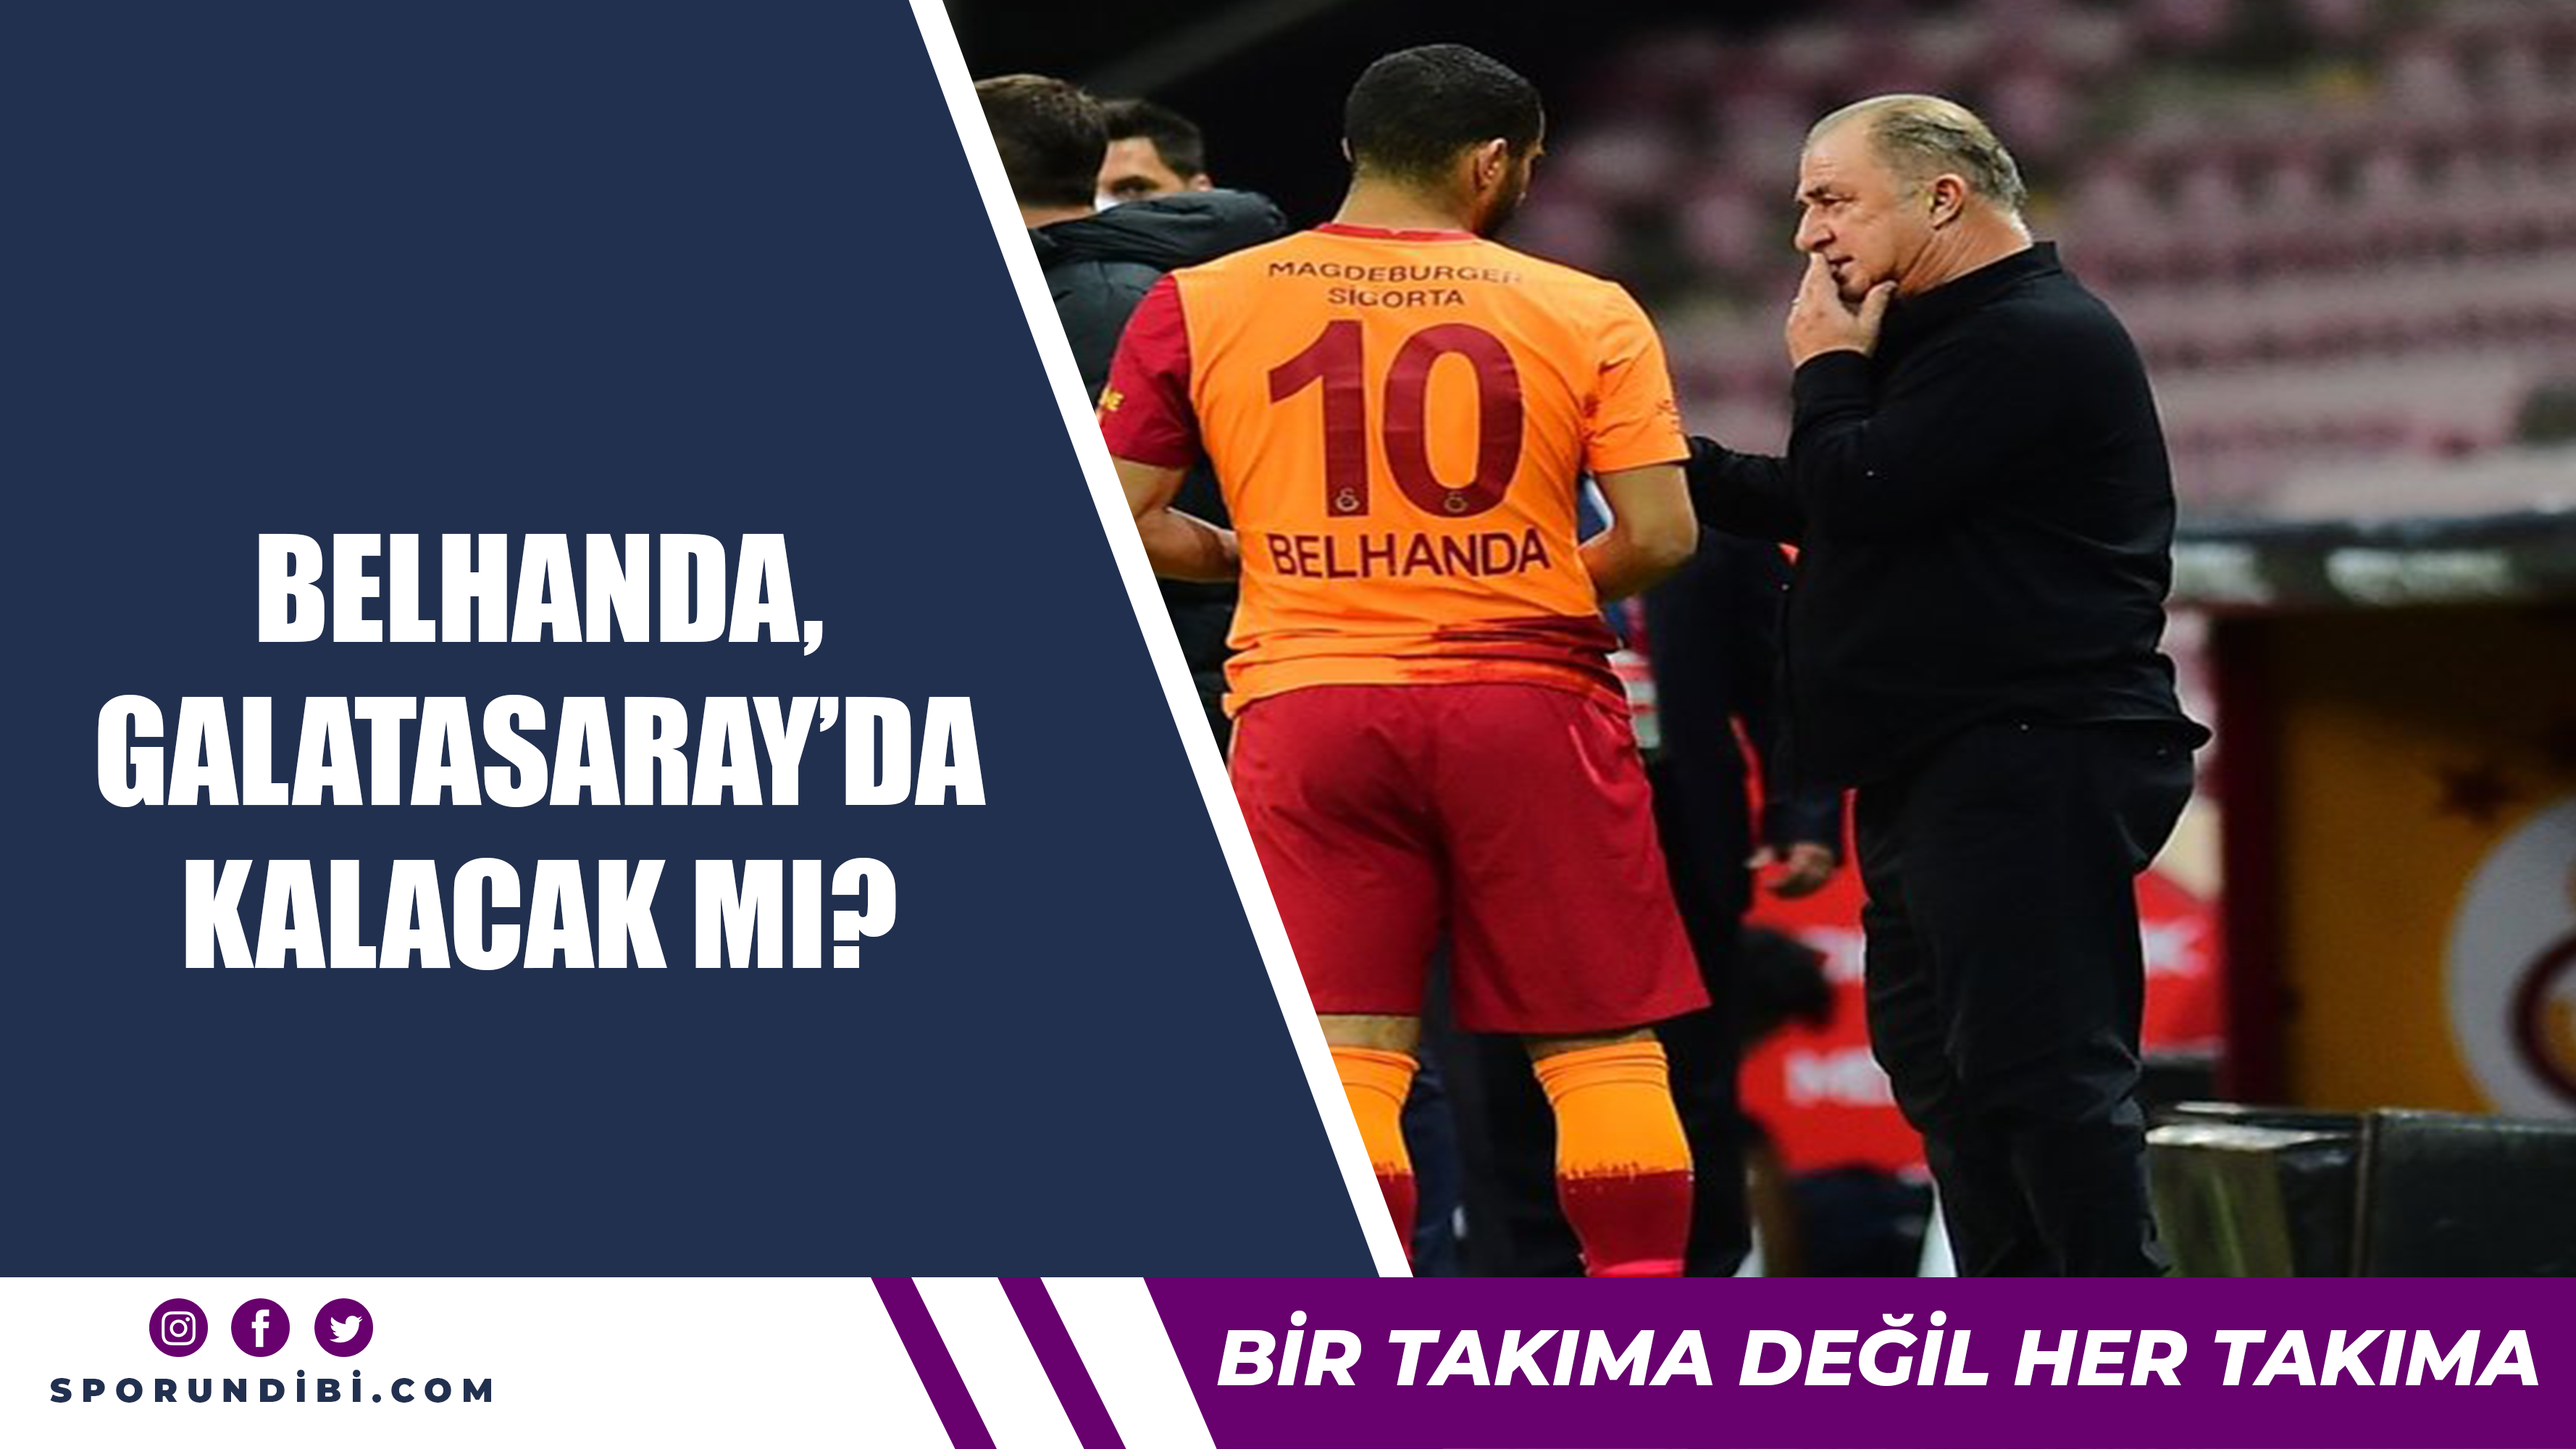 Belhanda, Galatasaray'da kalacak mı?